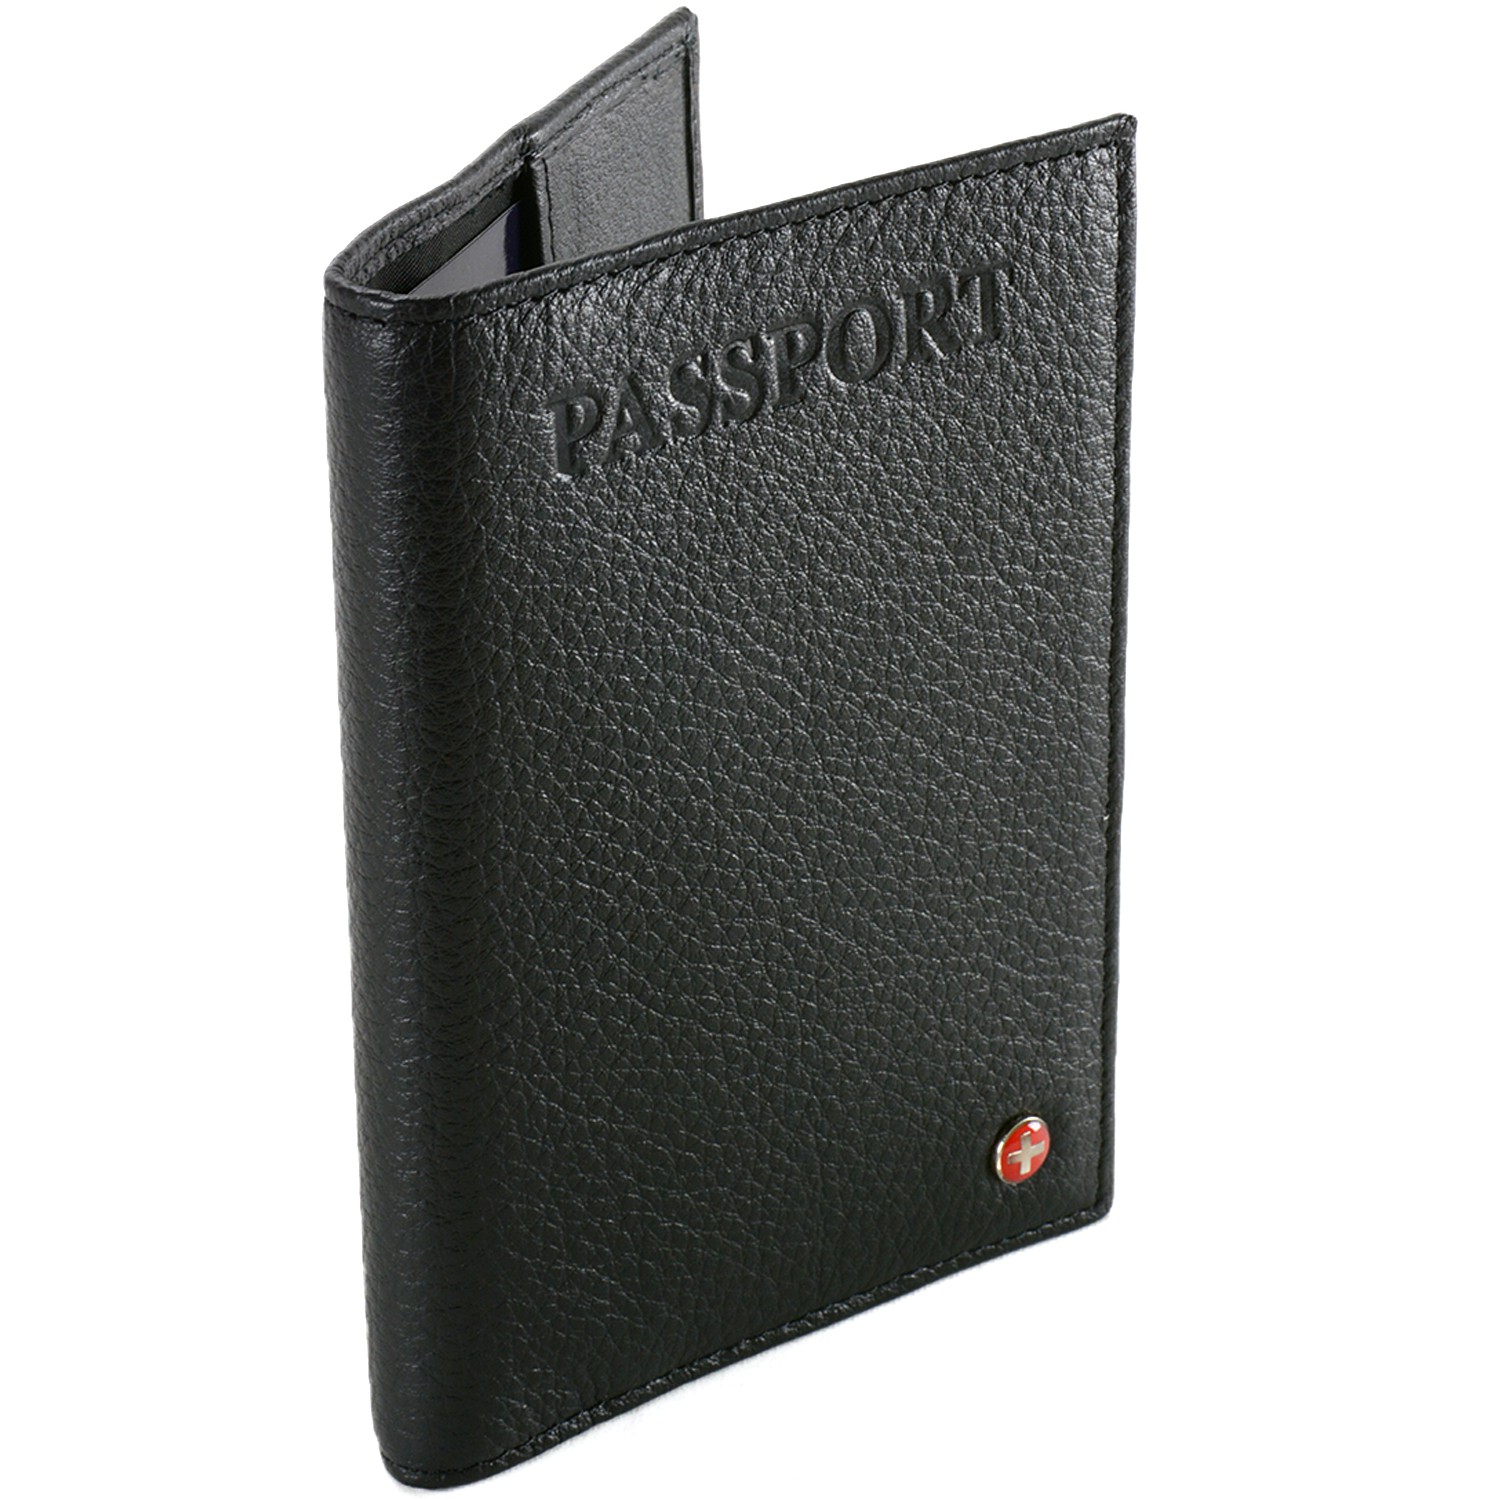 Belarus Passport Cover Travel Wallet Passport Case Pu Leather